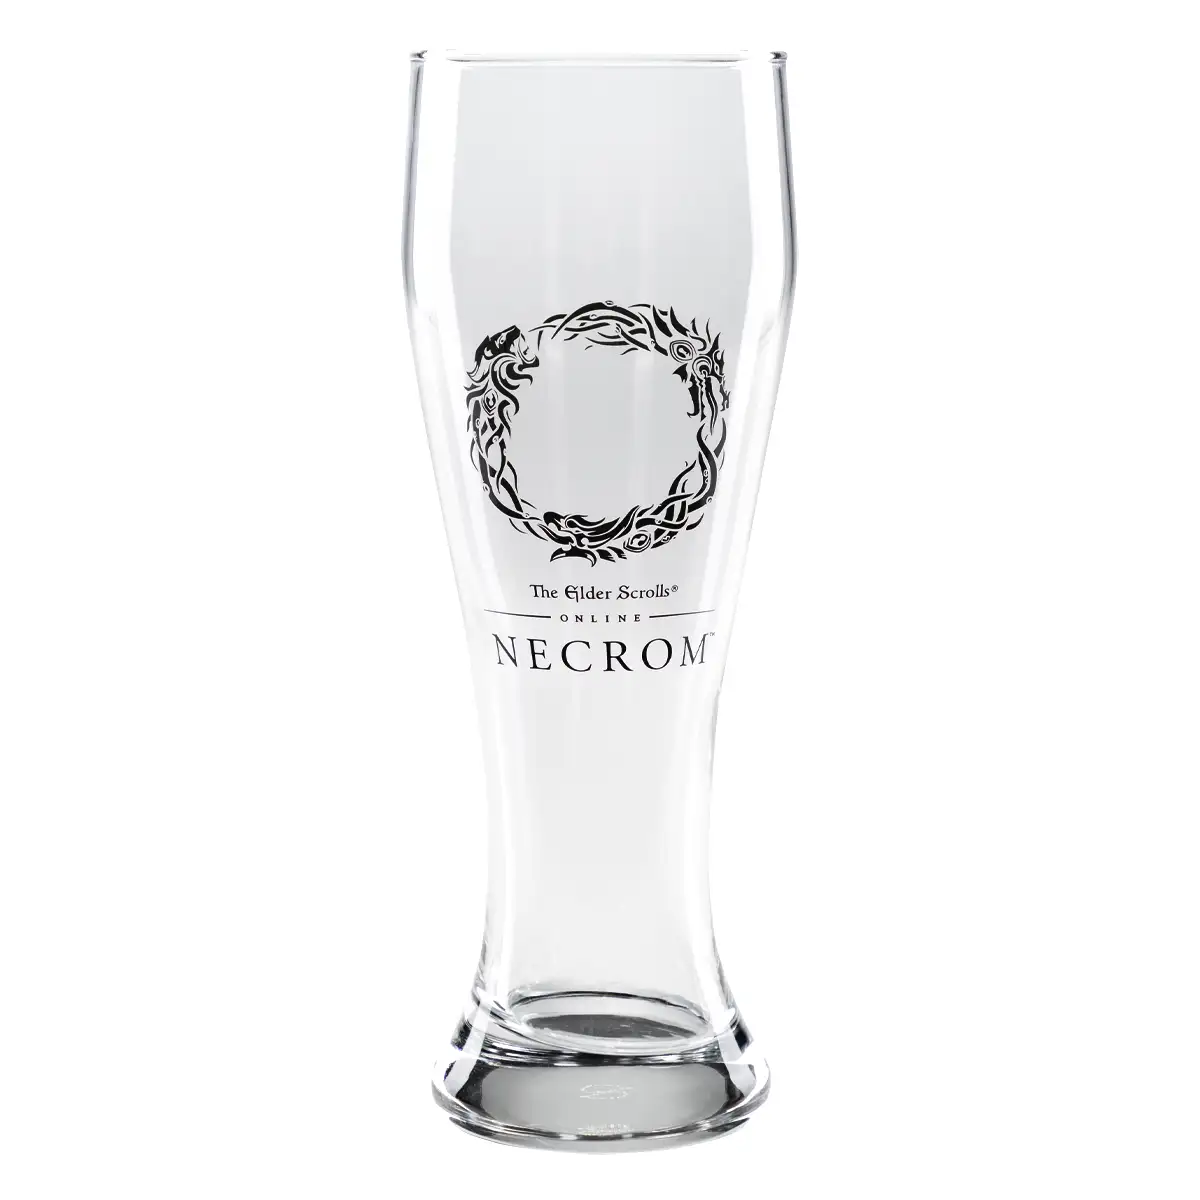 The Elder Scrolls Online Pint Glass "Necrom" Cover